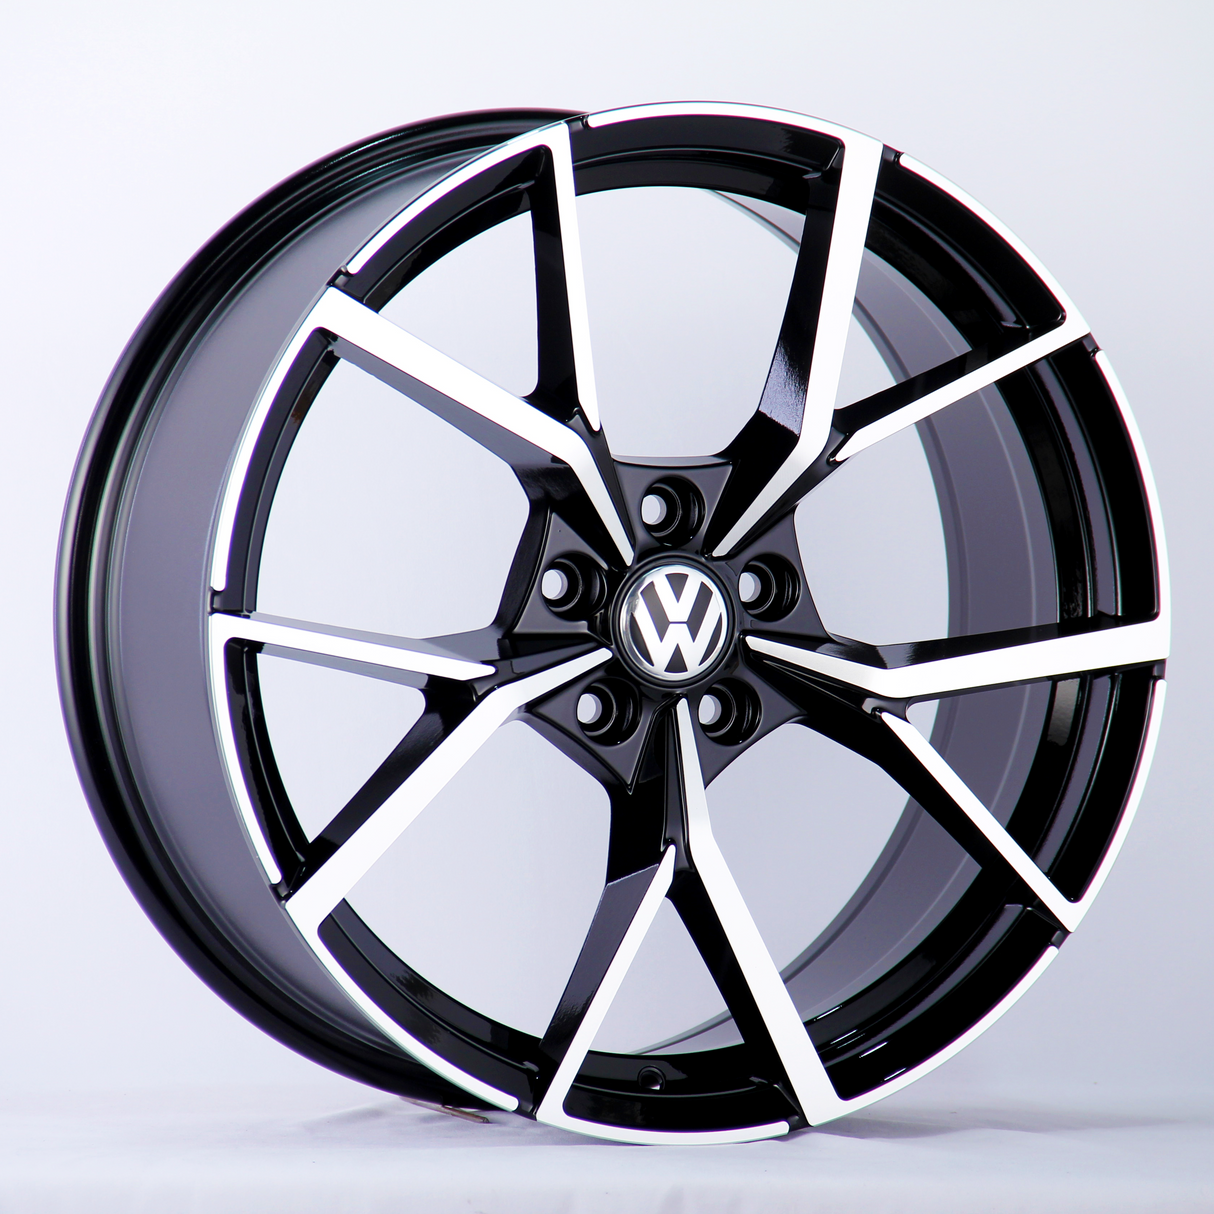 Tiguan - MK1/MK2: 19" Diamond Cut R Style Alloy Wheels 16+